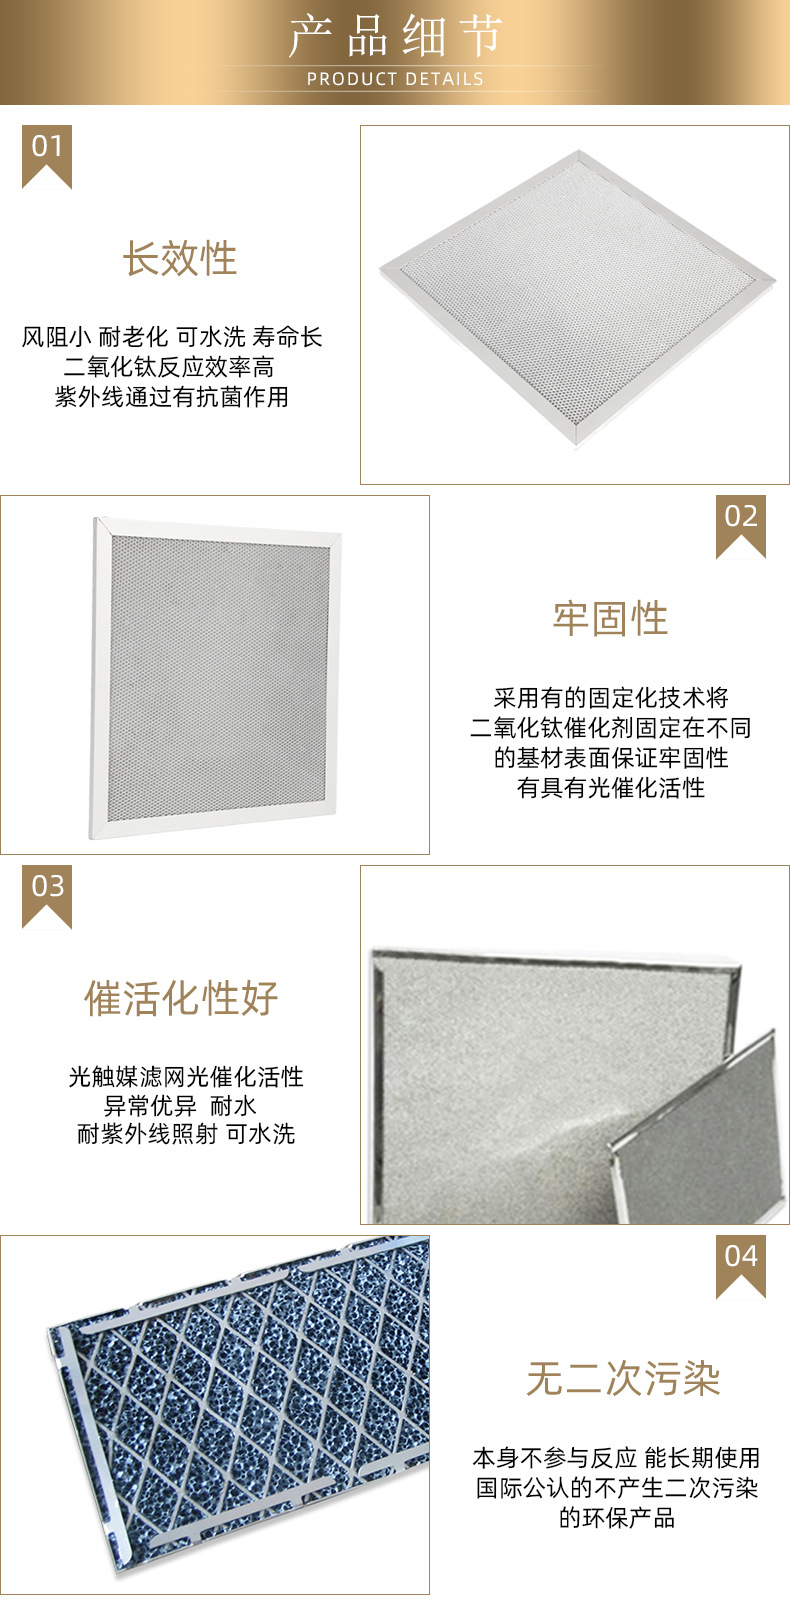 Customized titanium dioxide photocatalyst filter screen, UV photocatalyst filter screen, high-efficiency aluminum based aluminum honeycomb photocatalyst screen